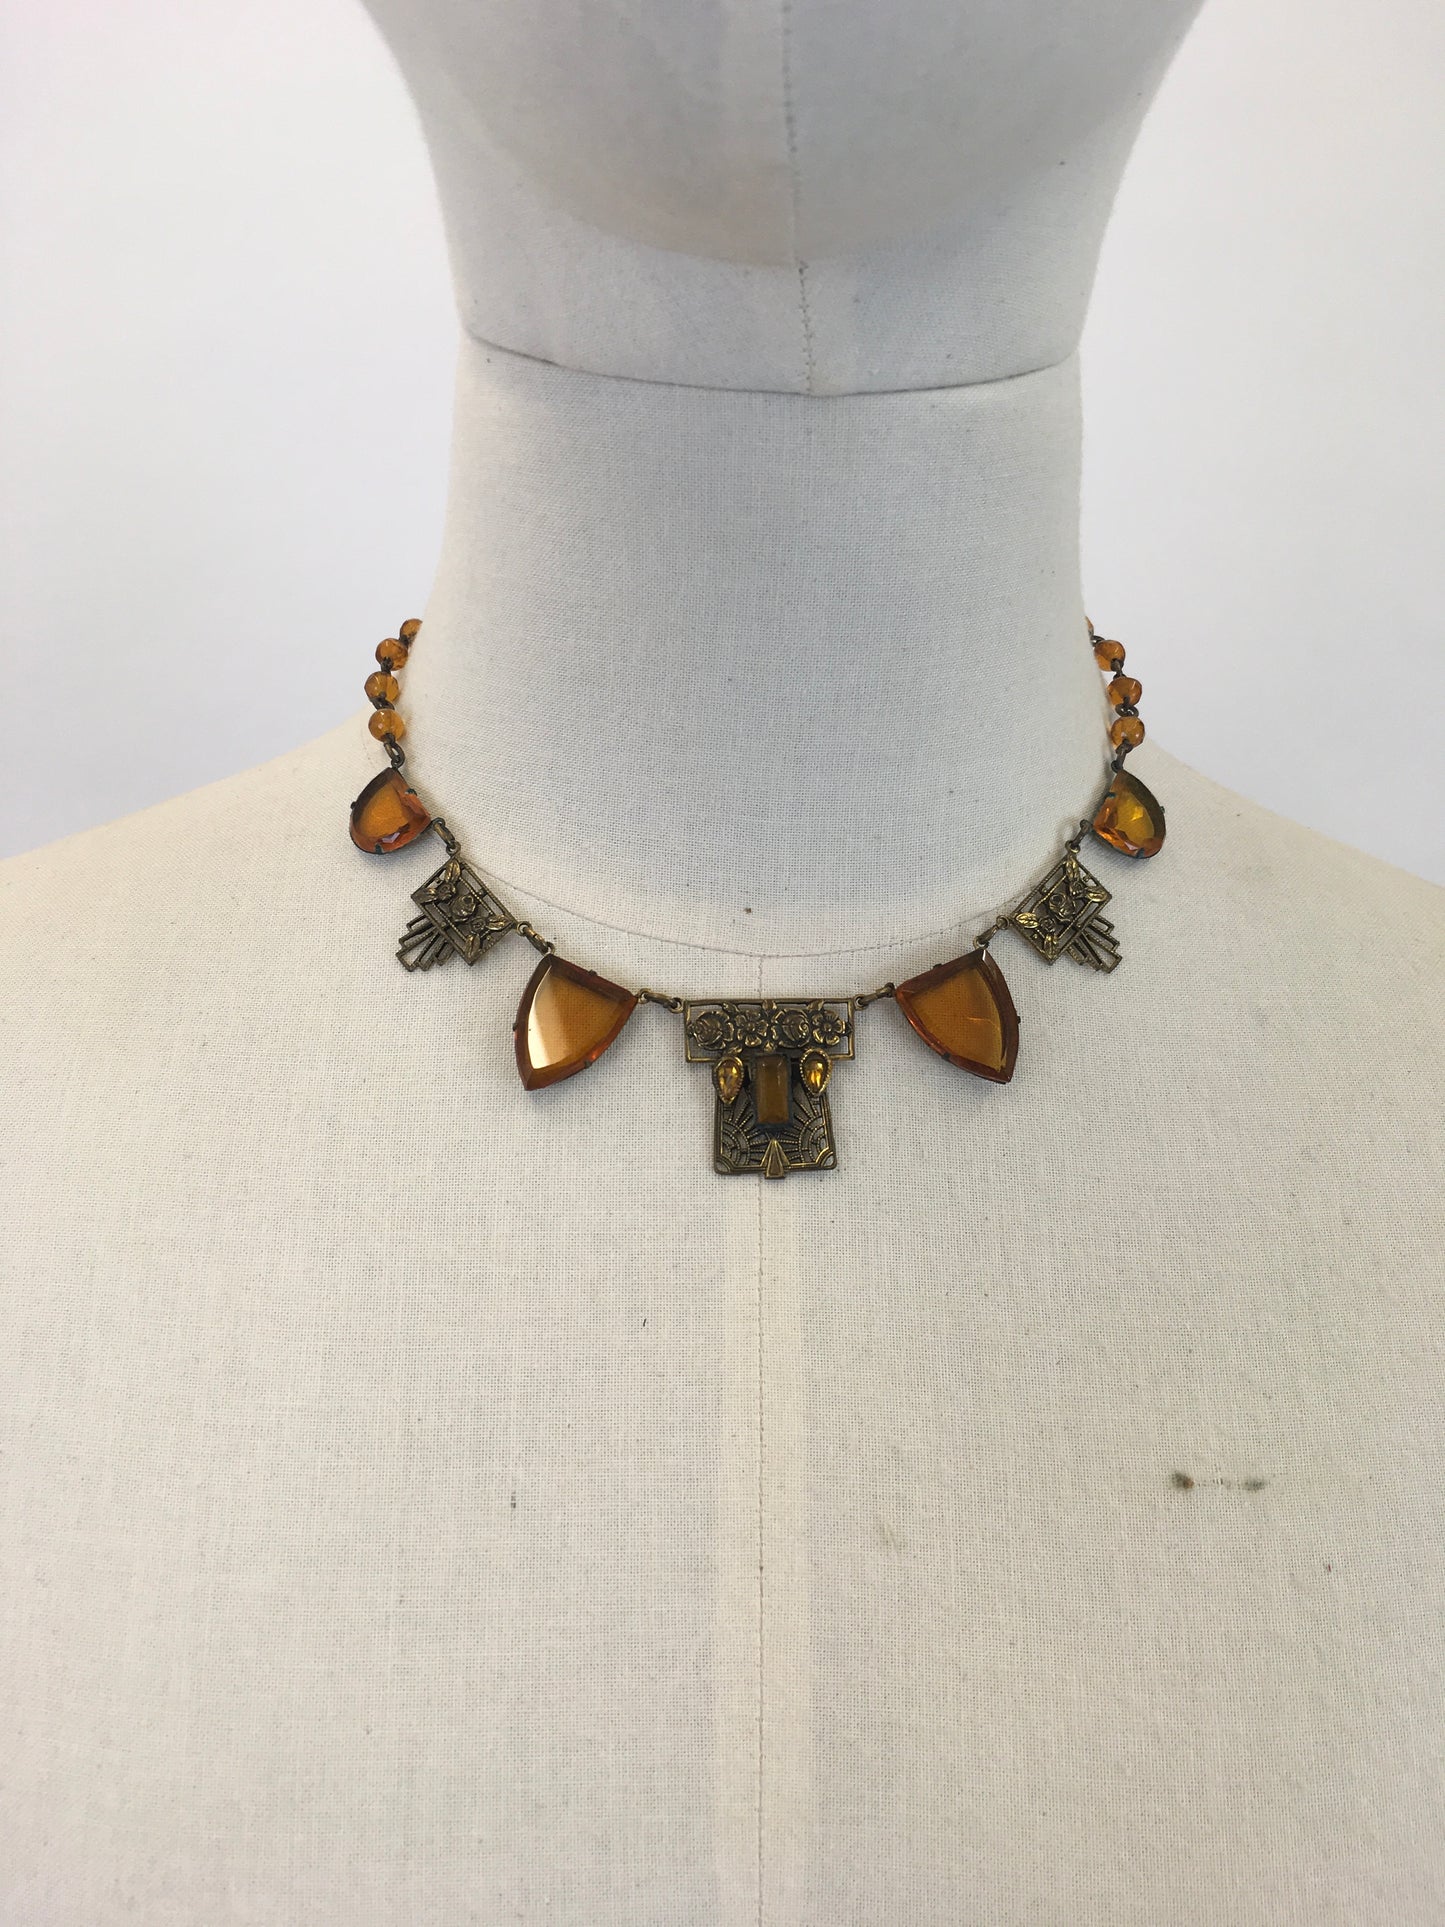 Original 1920's Sensational Necklace - With Exquisite Details of Sunbursts and Roses